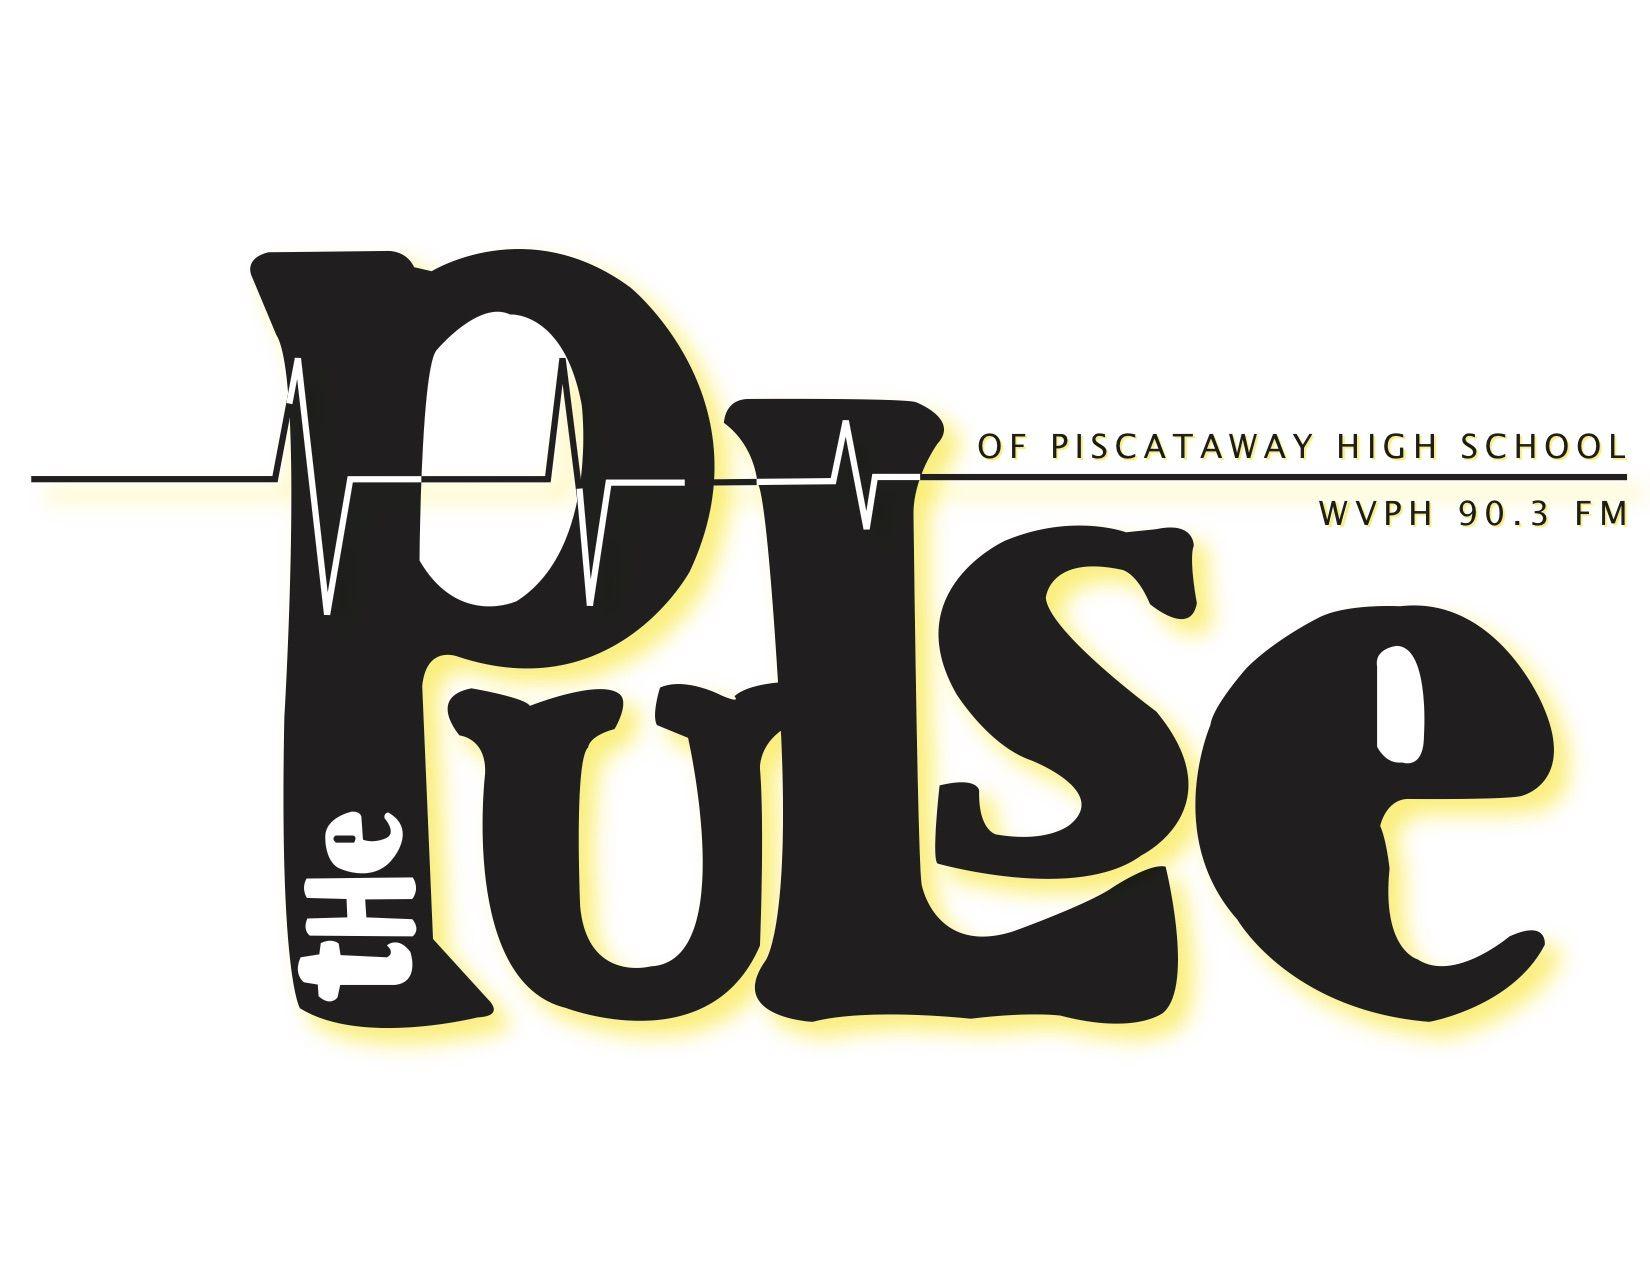 Piscataway Logo - WVPH 90.3 FM - Piscataway High School